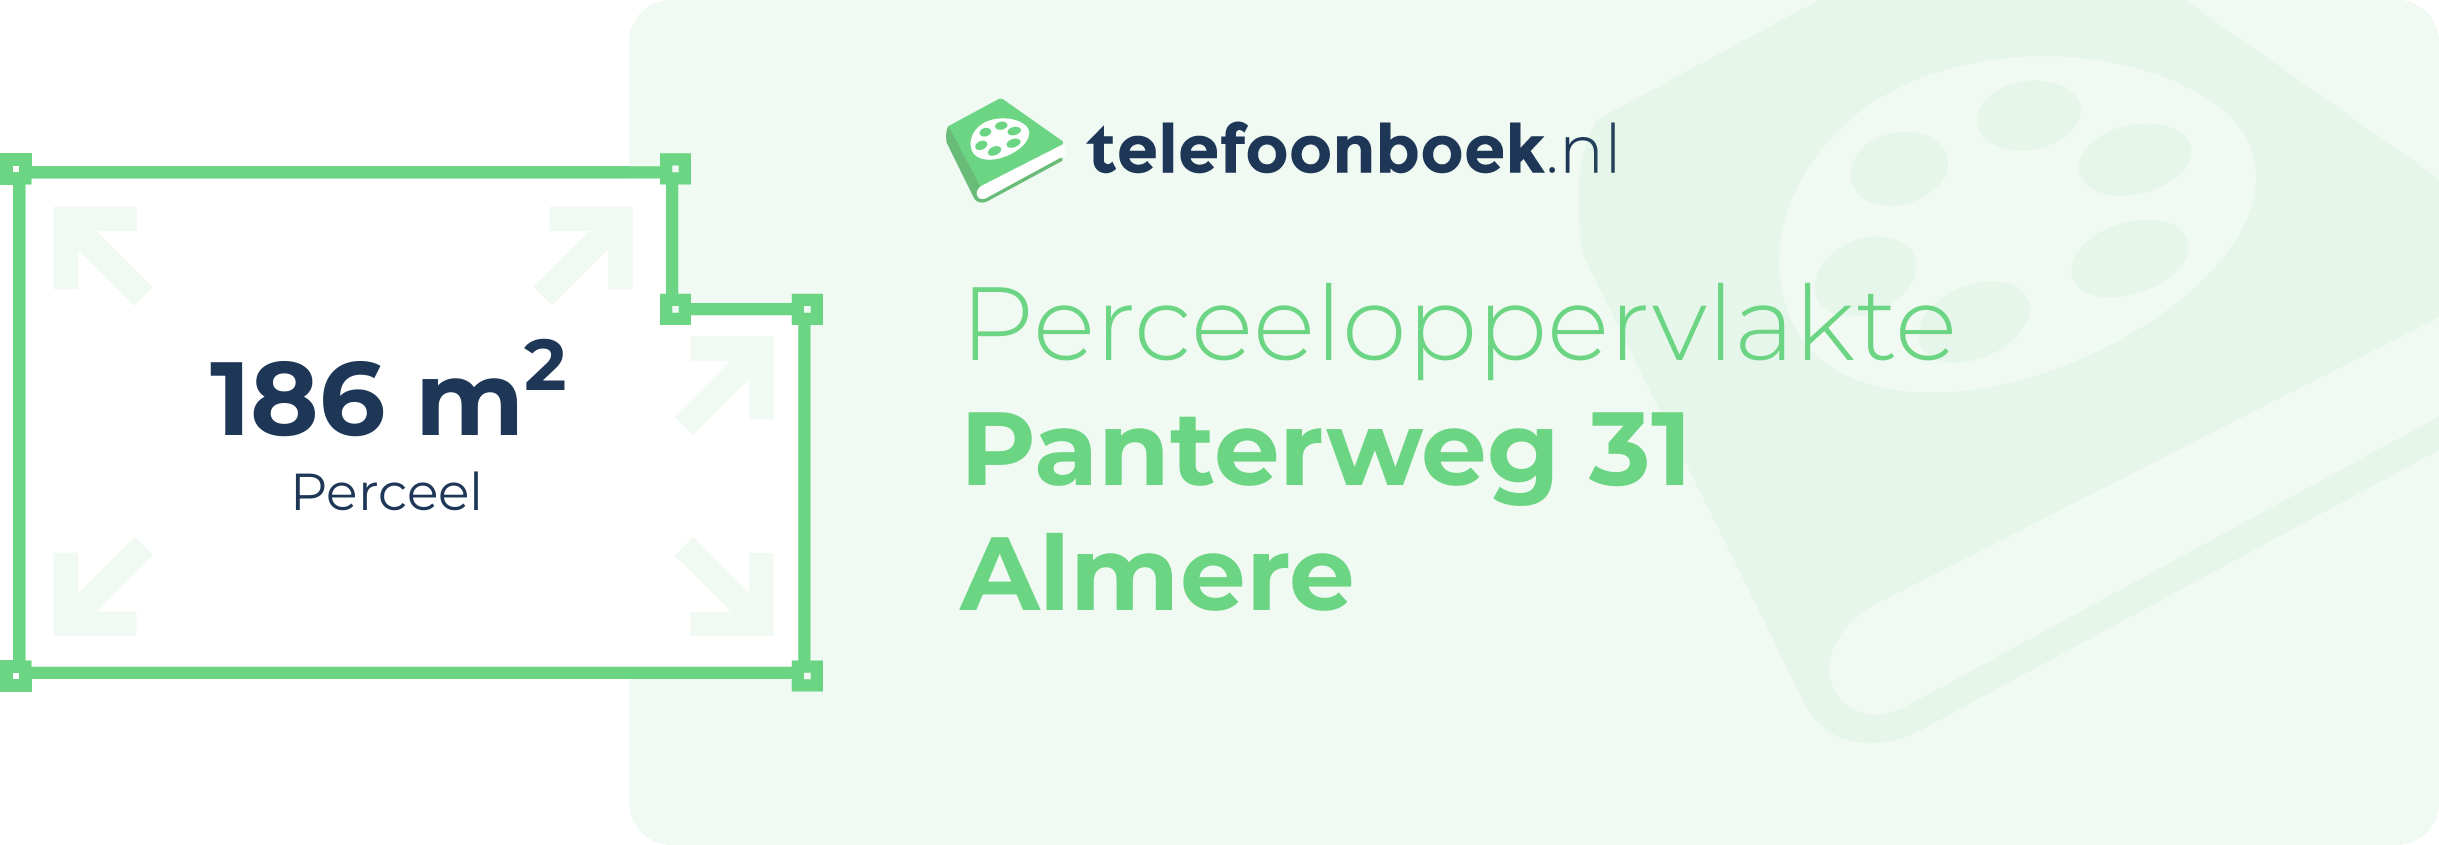 Perceeloppervlakte Panterweg 31 Almere